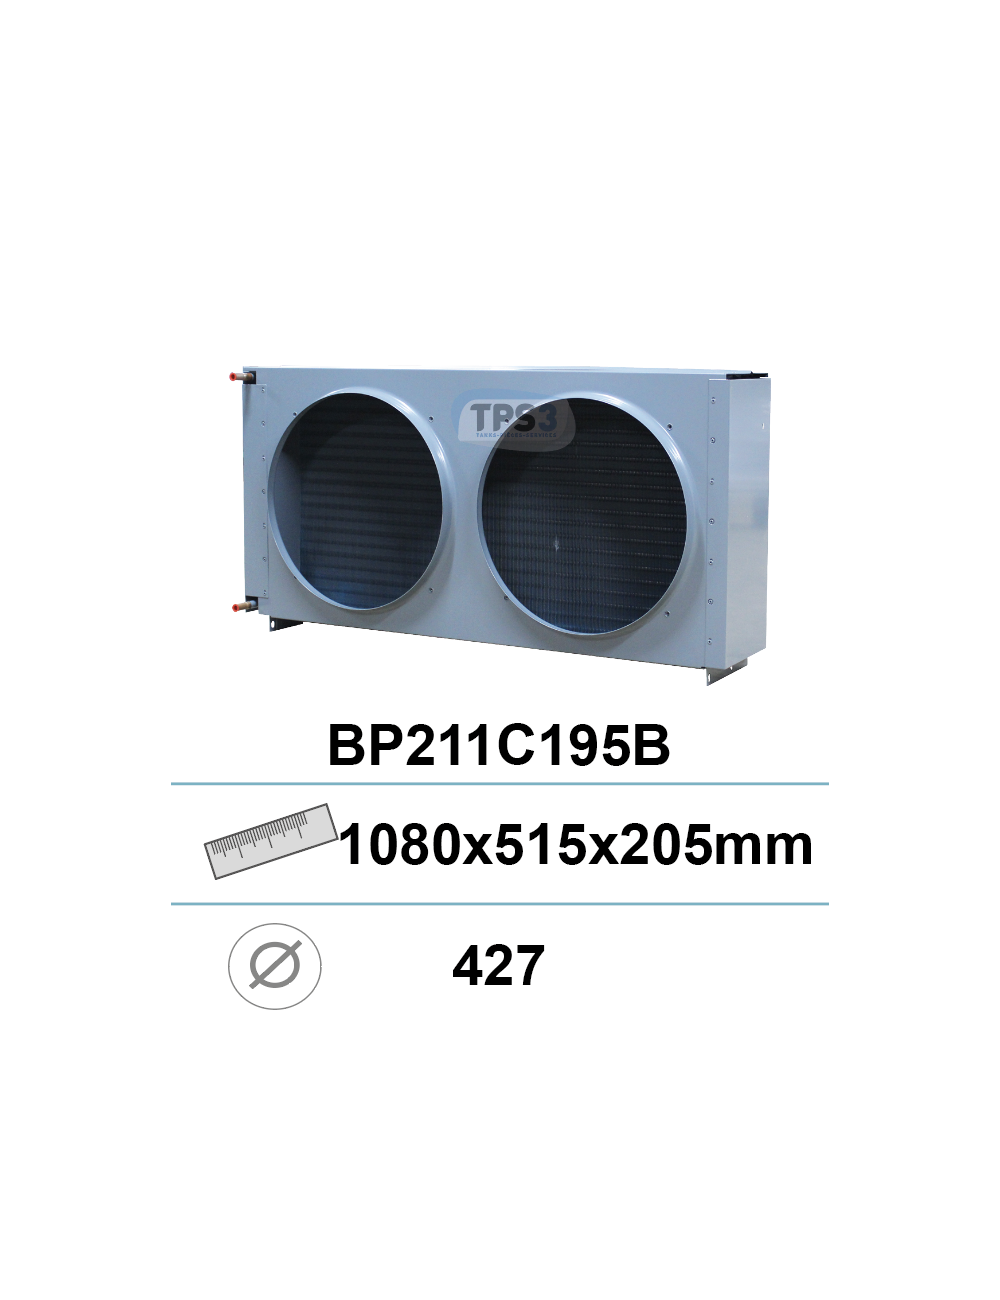 Condenseur type BP211C195B 1080x515x205 2 ouies 427mm